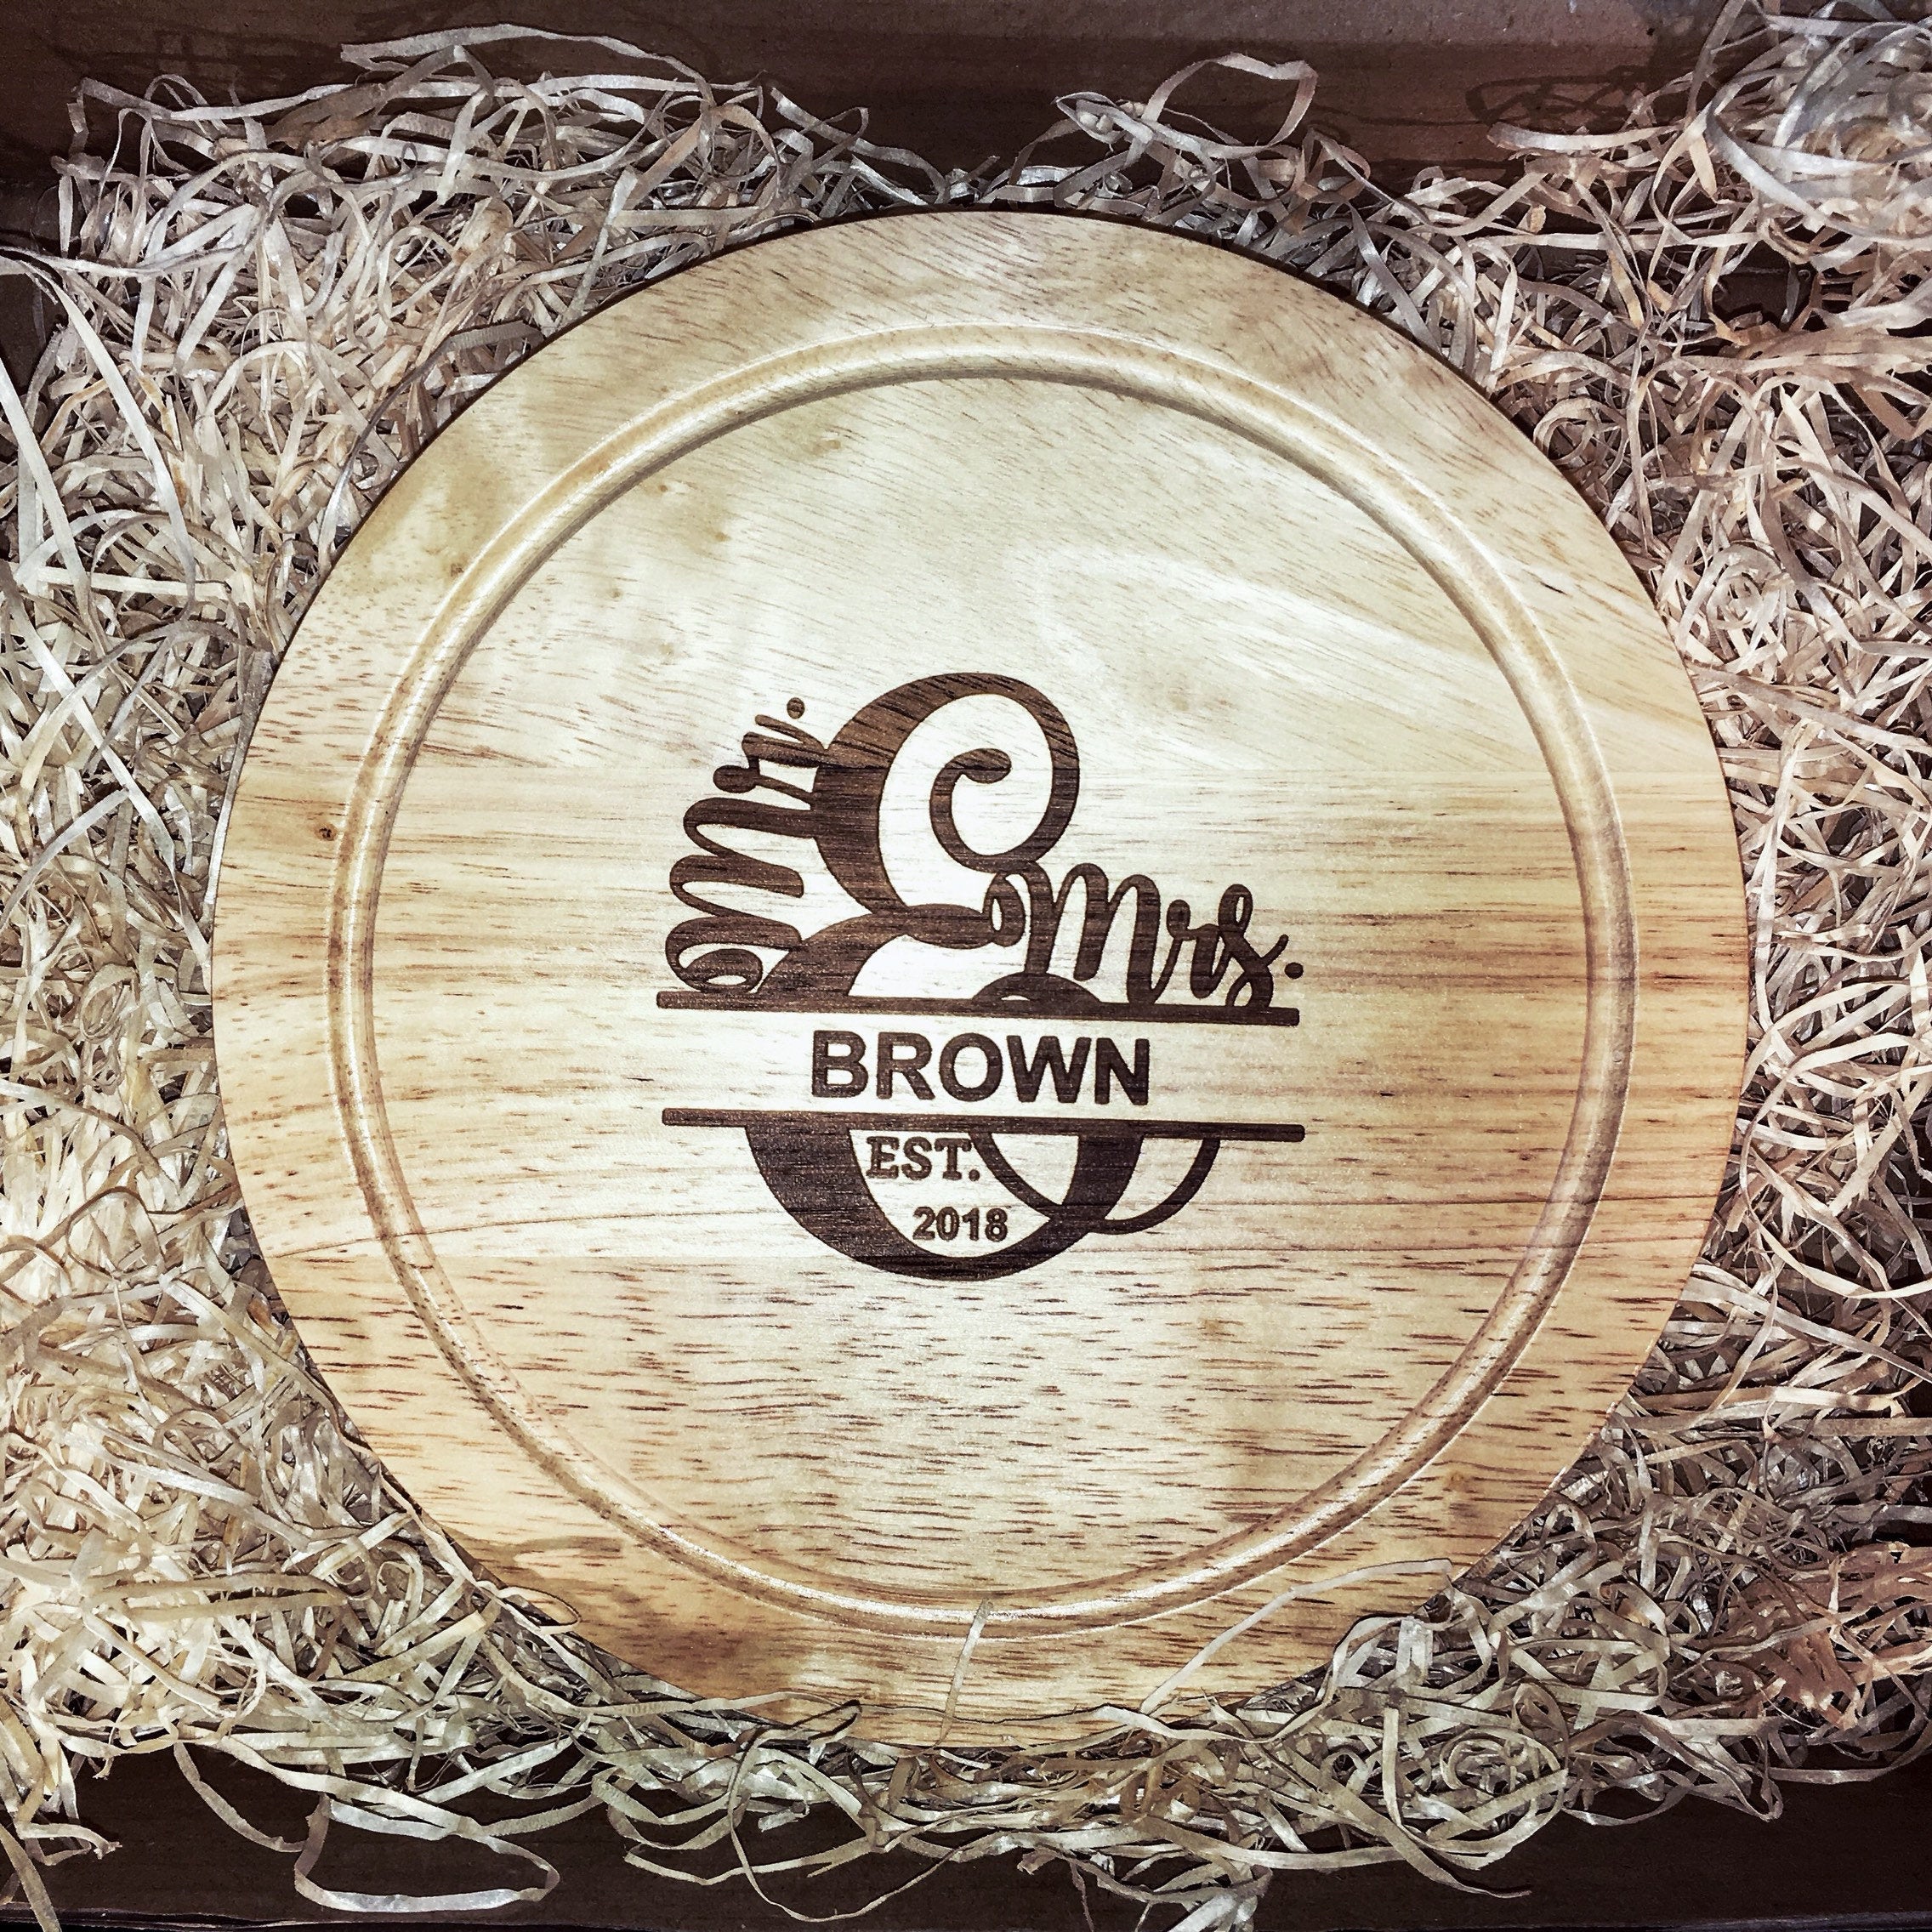 Personalised round wooden cheese board set - Split monogram Mr & Mrs